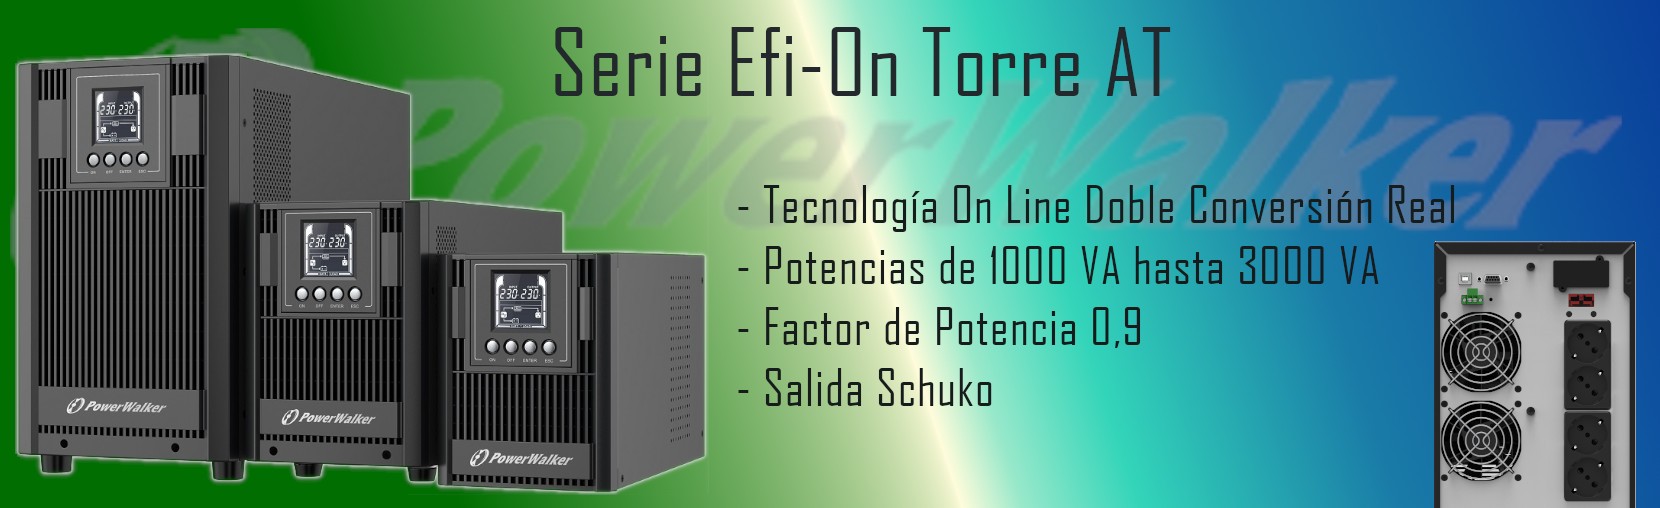 PowerWalker Spain. SAI Serie Efi-On Torre AT. VFI 1000 2000 3000 AT